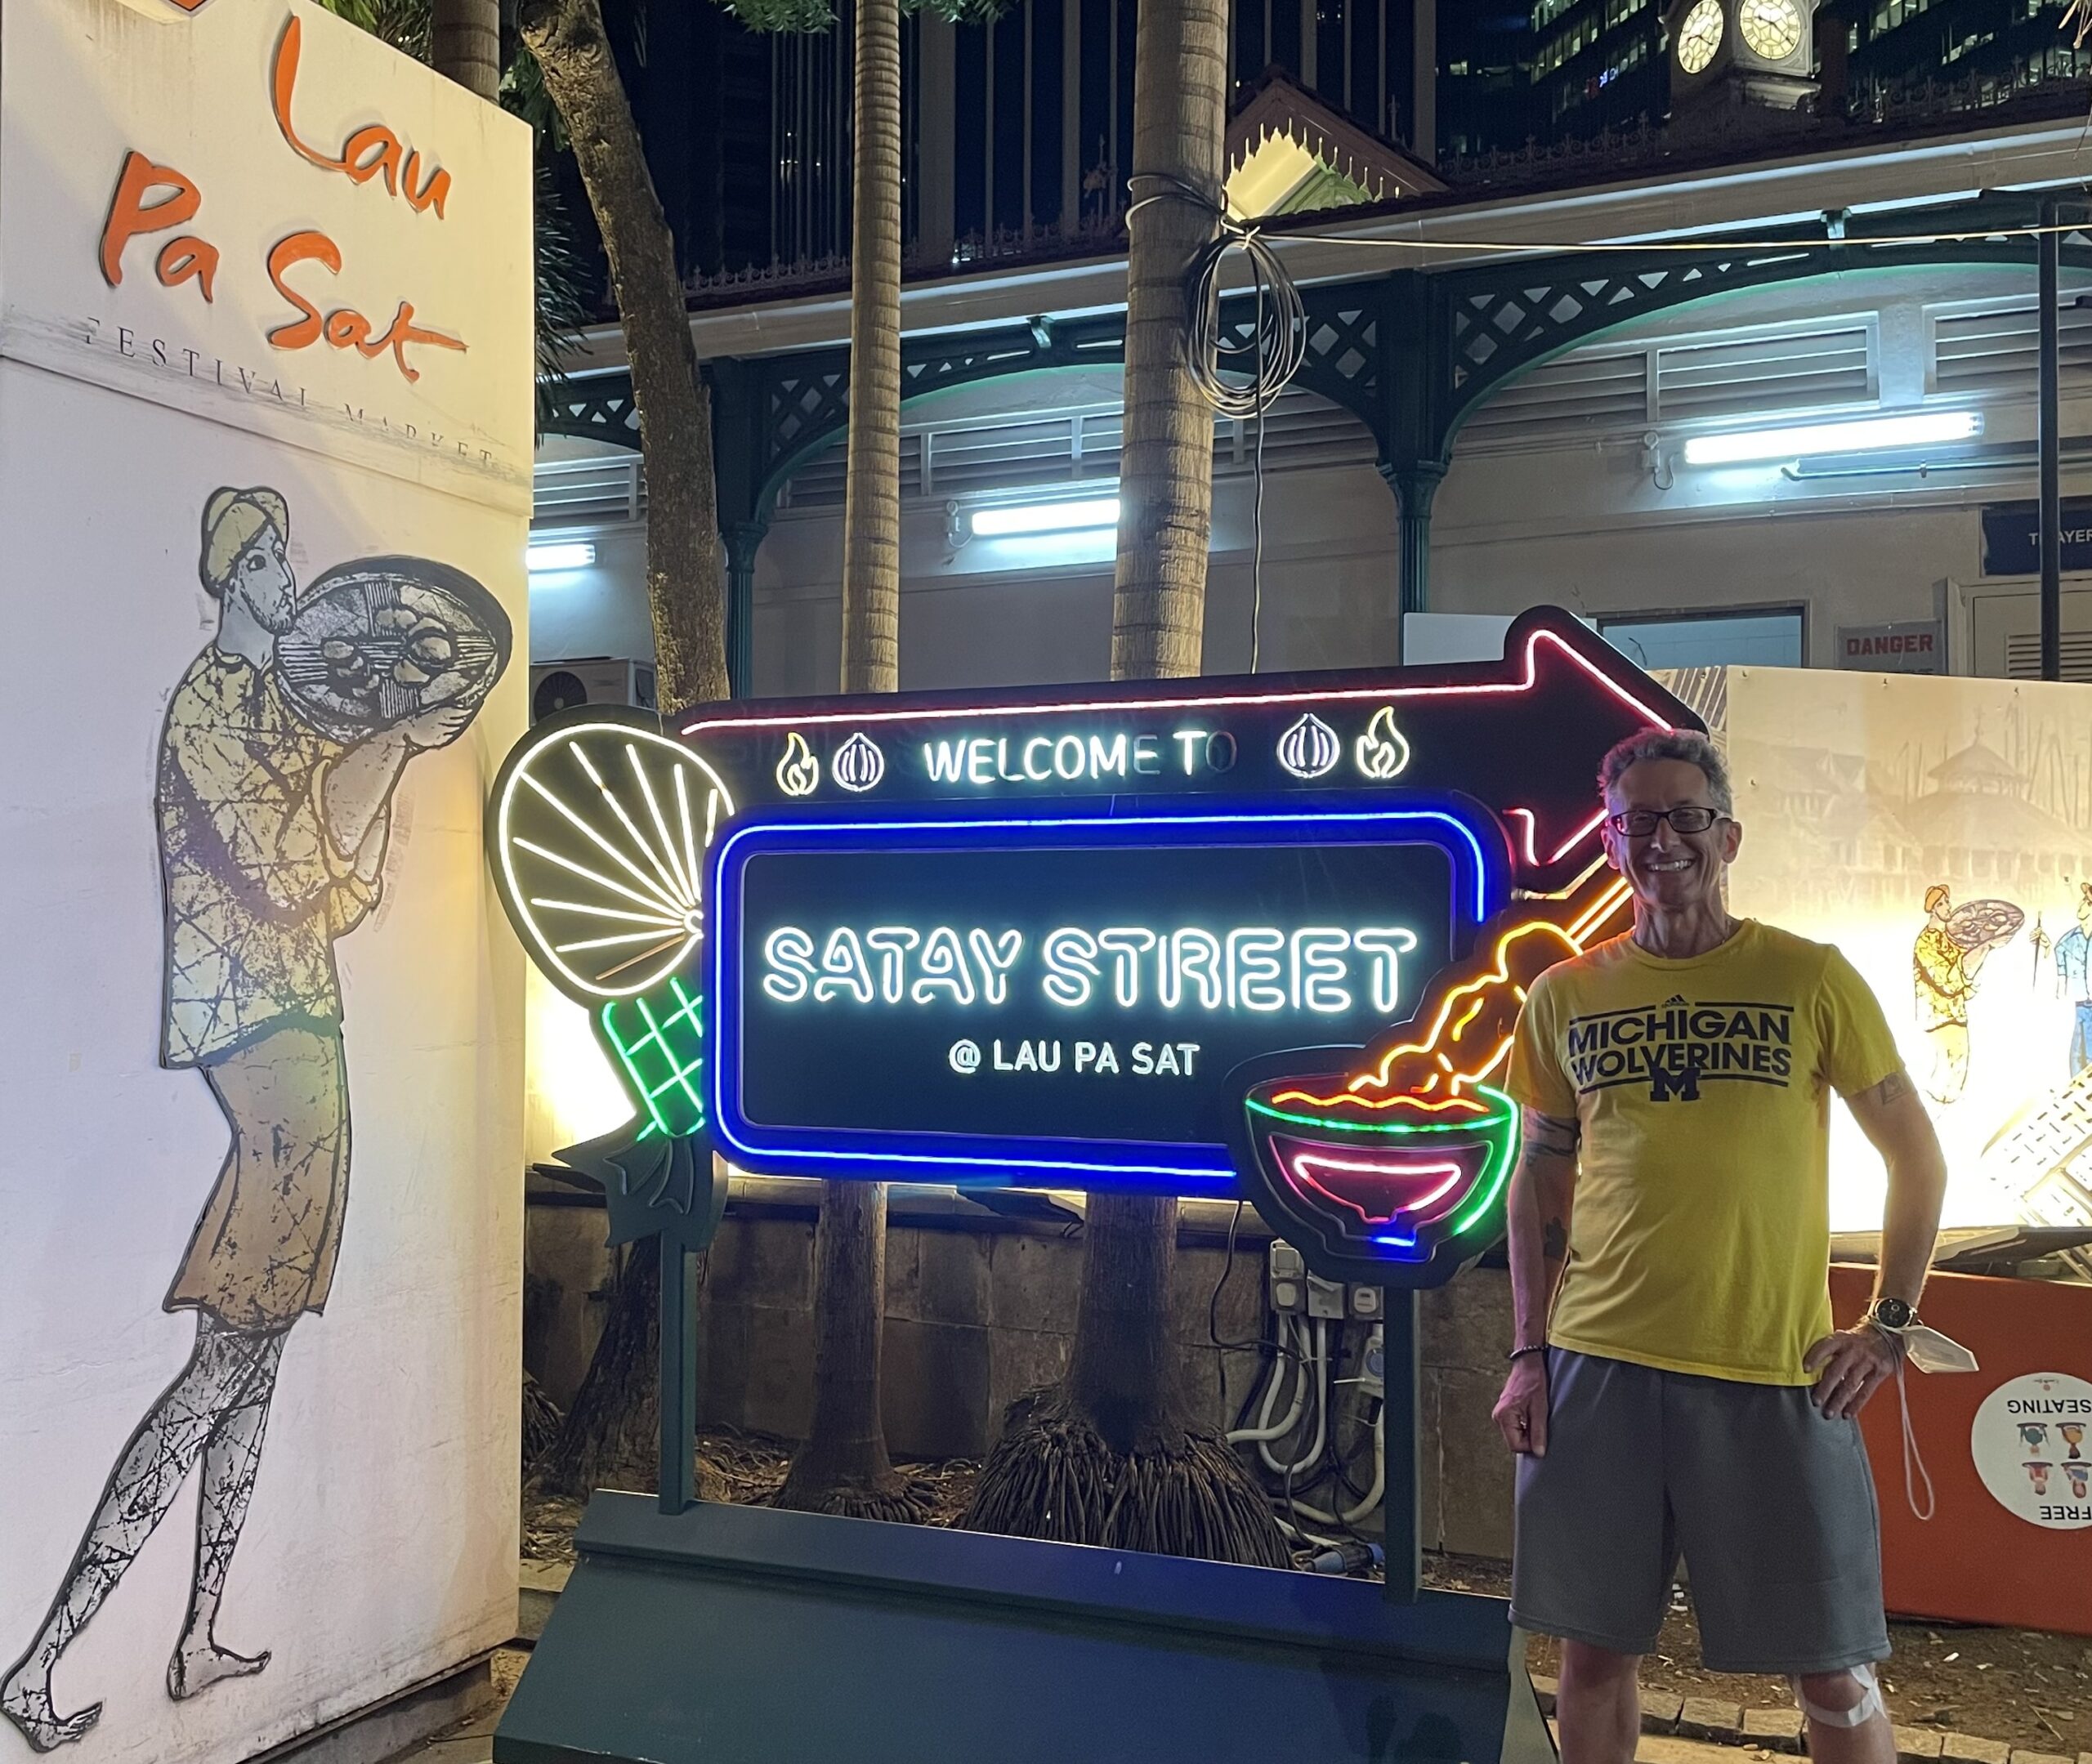 Doug Smith, ’86, MSE’89, visited Singapore’s famous Satay Street at the La Pau Sat hawker market.